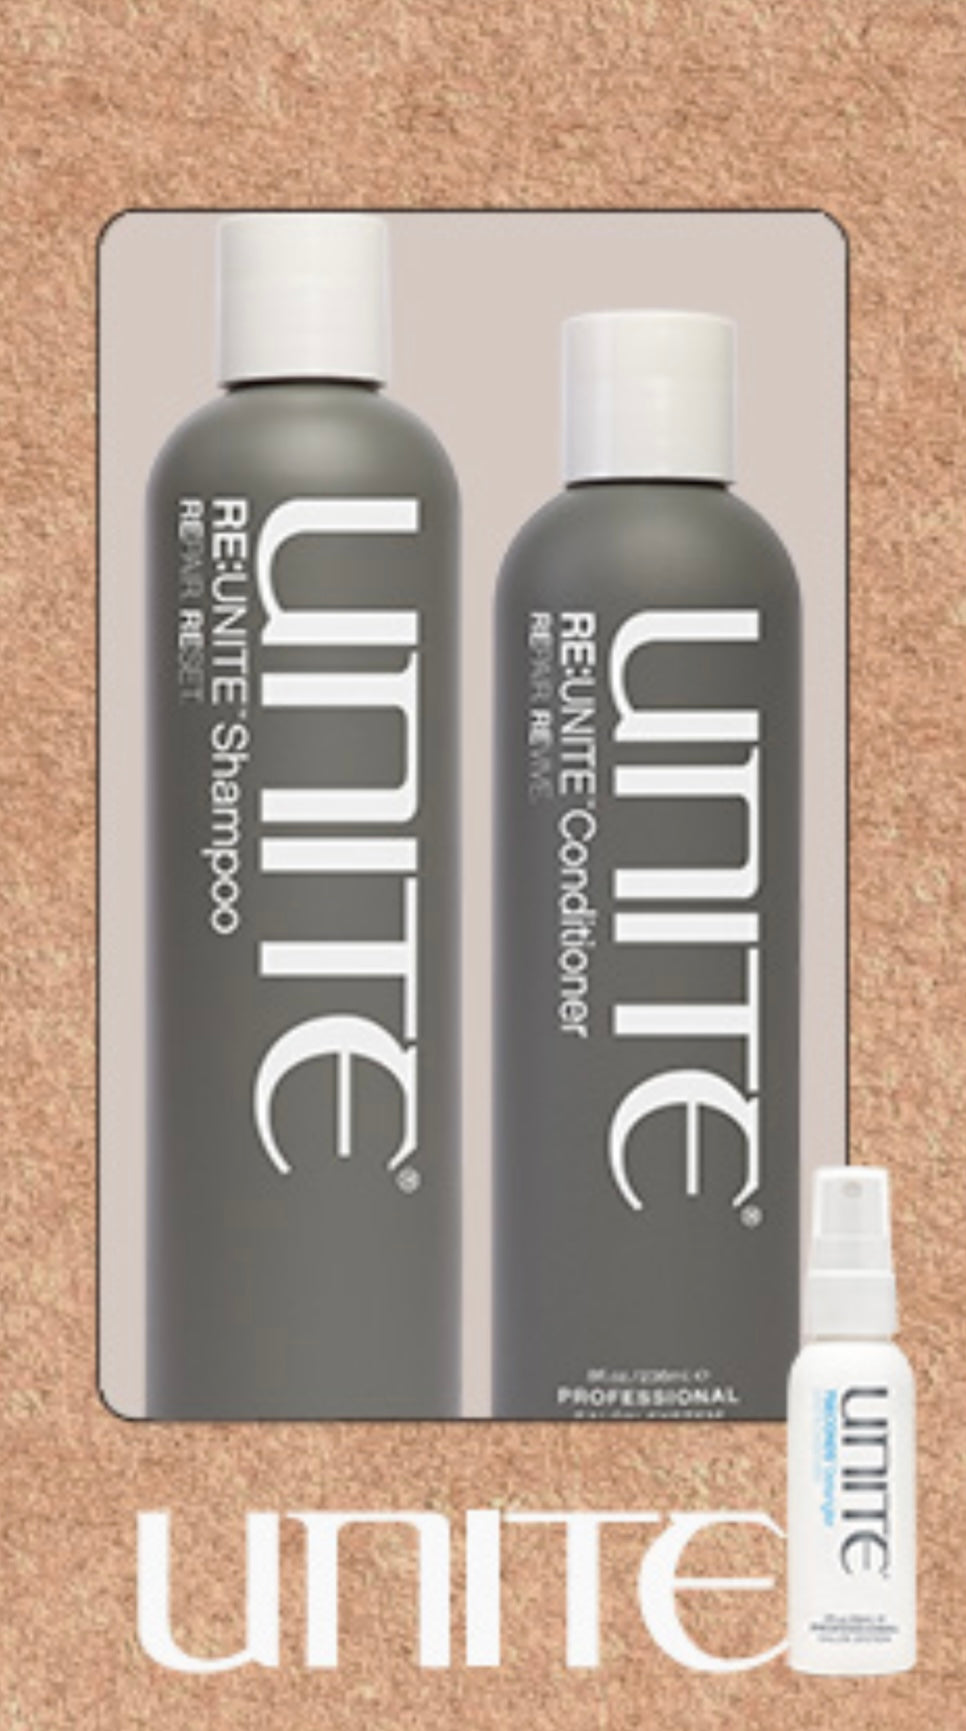 UNITE Re:Unite Shampoo 300ml and Conditioner 236ml plus free Detangler sample size